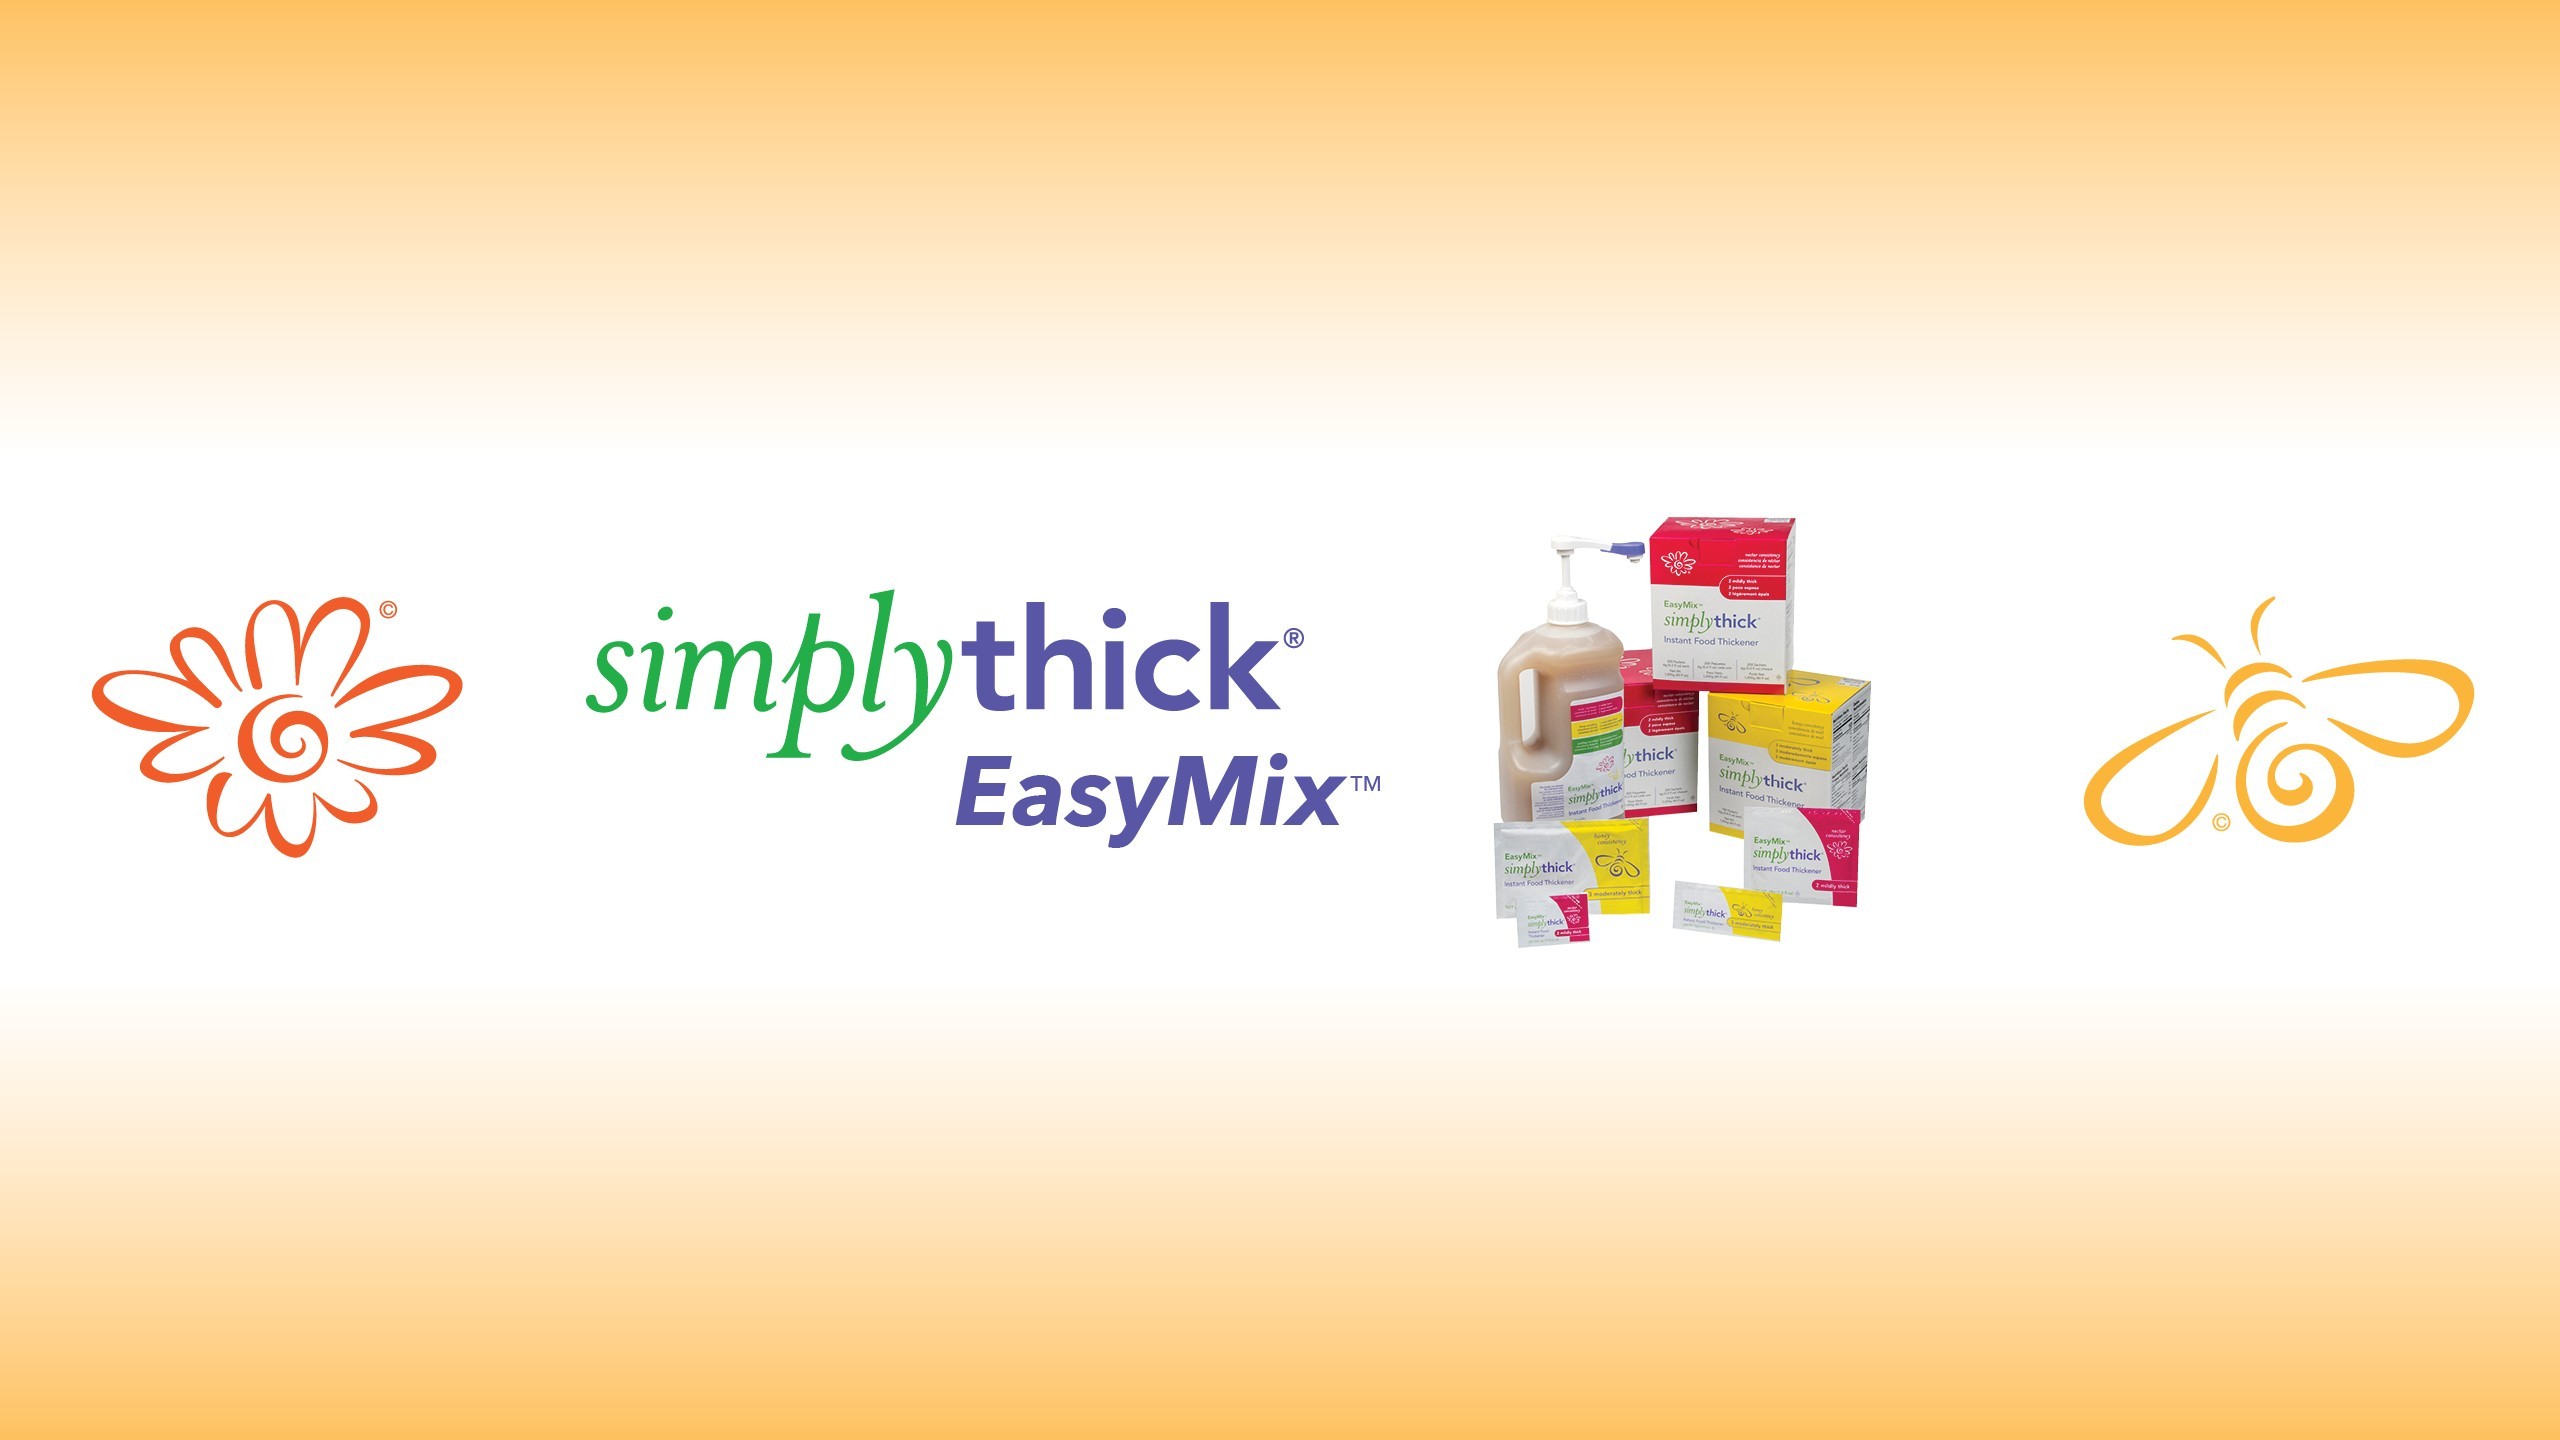 SimplyThick, LLC